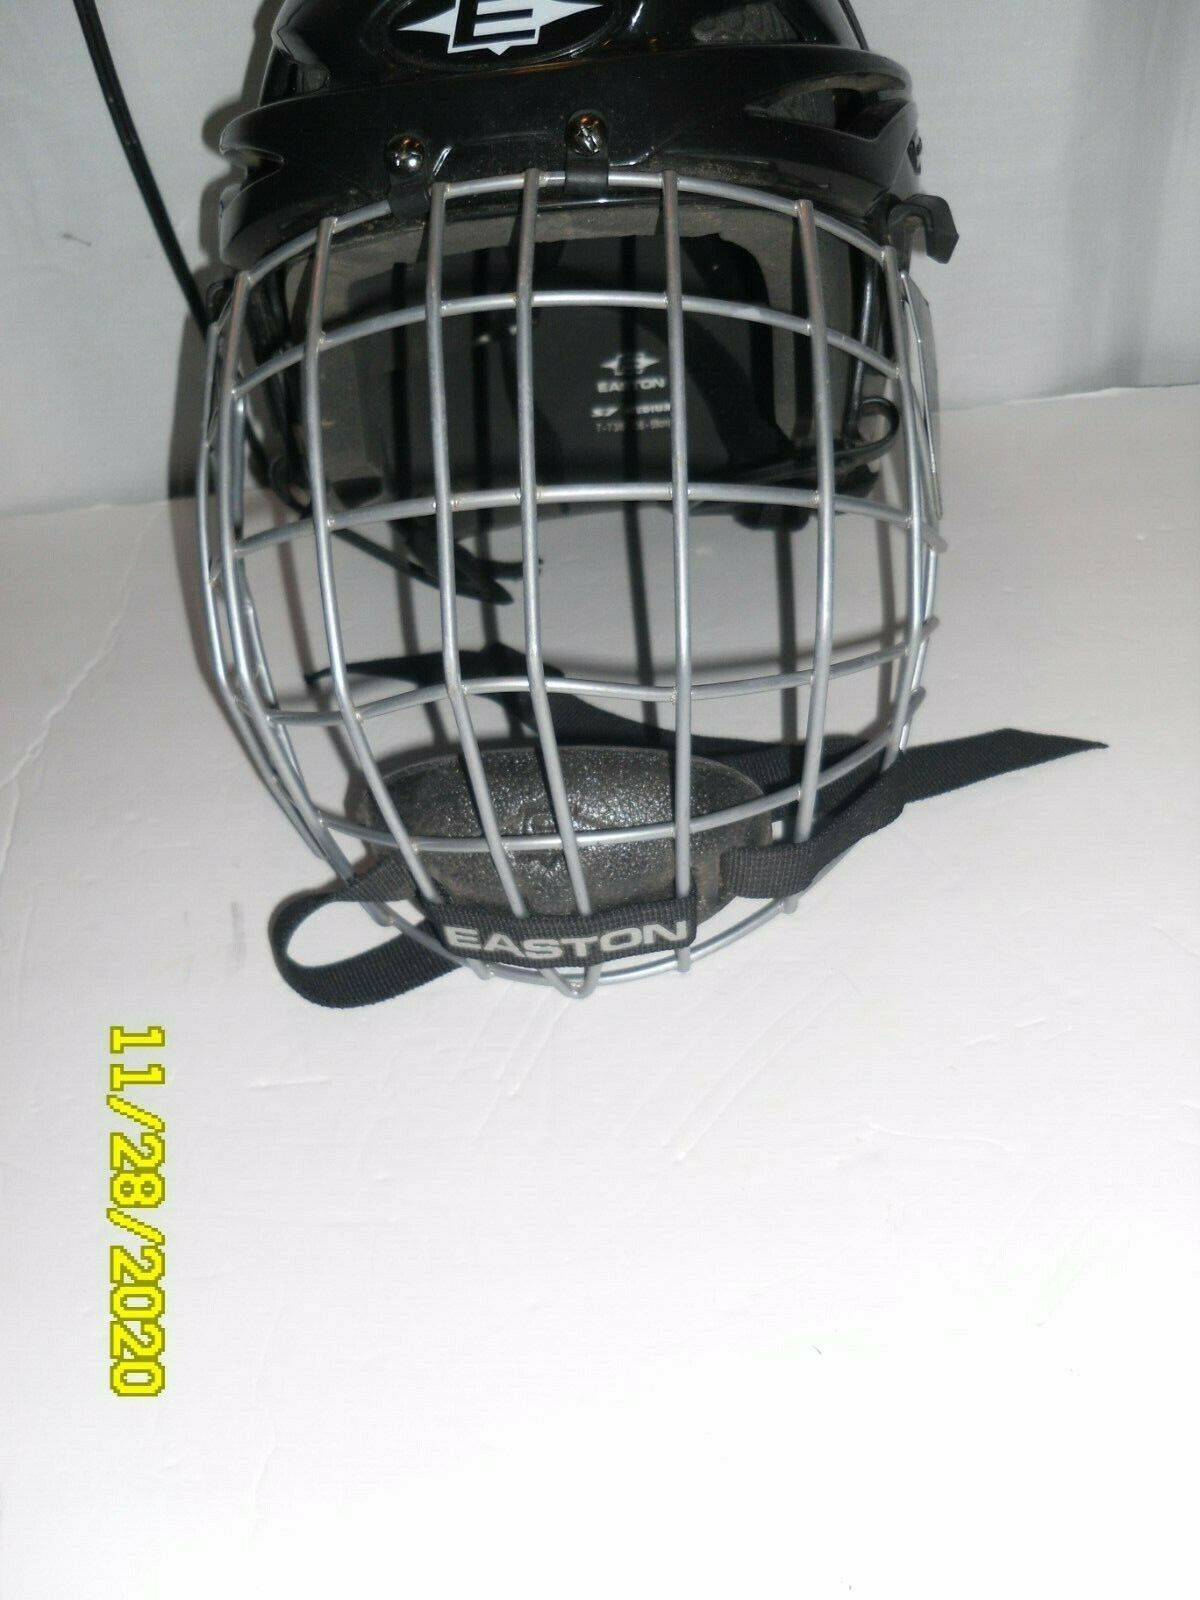 Easton Hockey Helmet With Face Guard Blue Size 7 -7 3/8 (56-59 cm) - $24.51